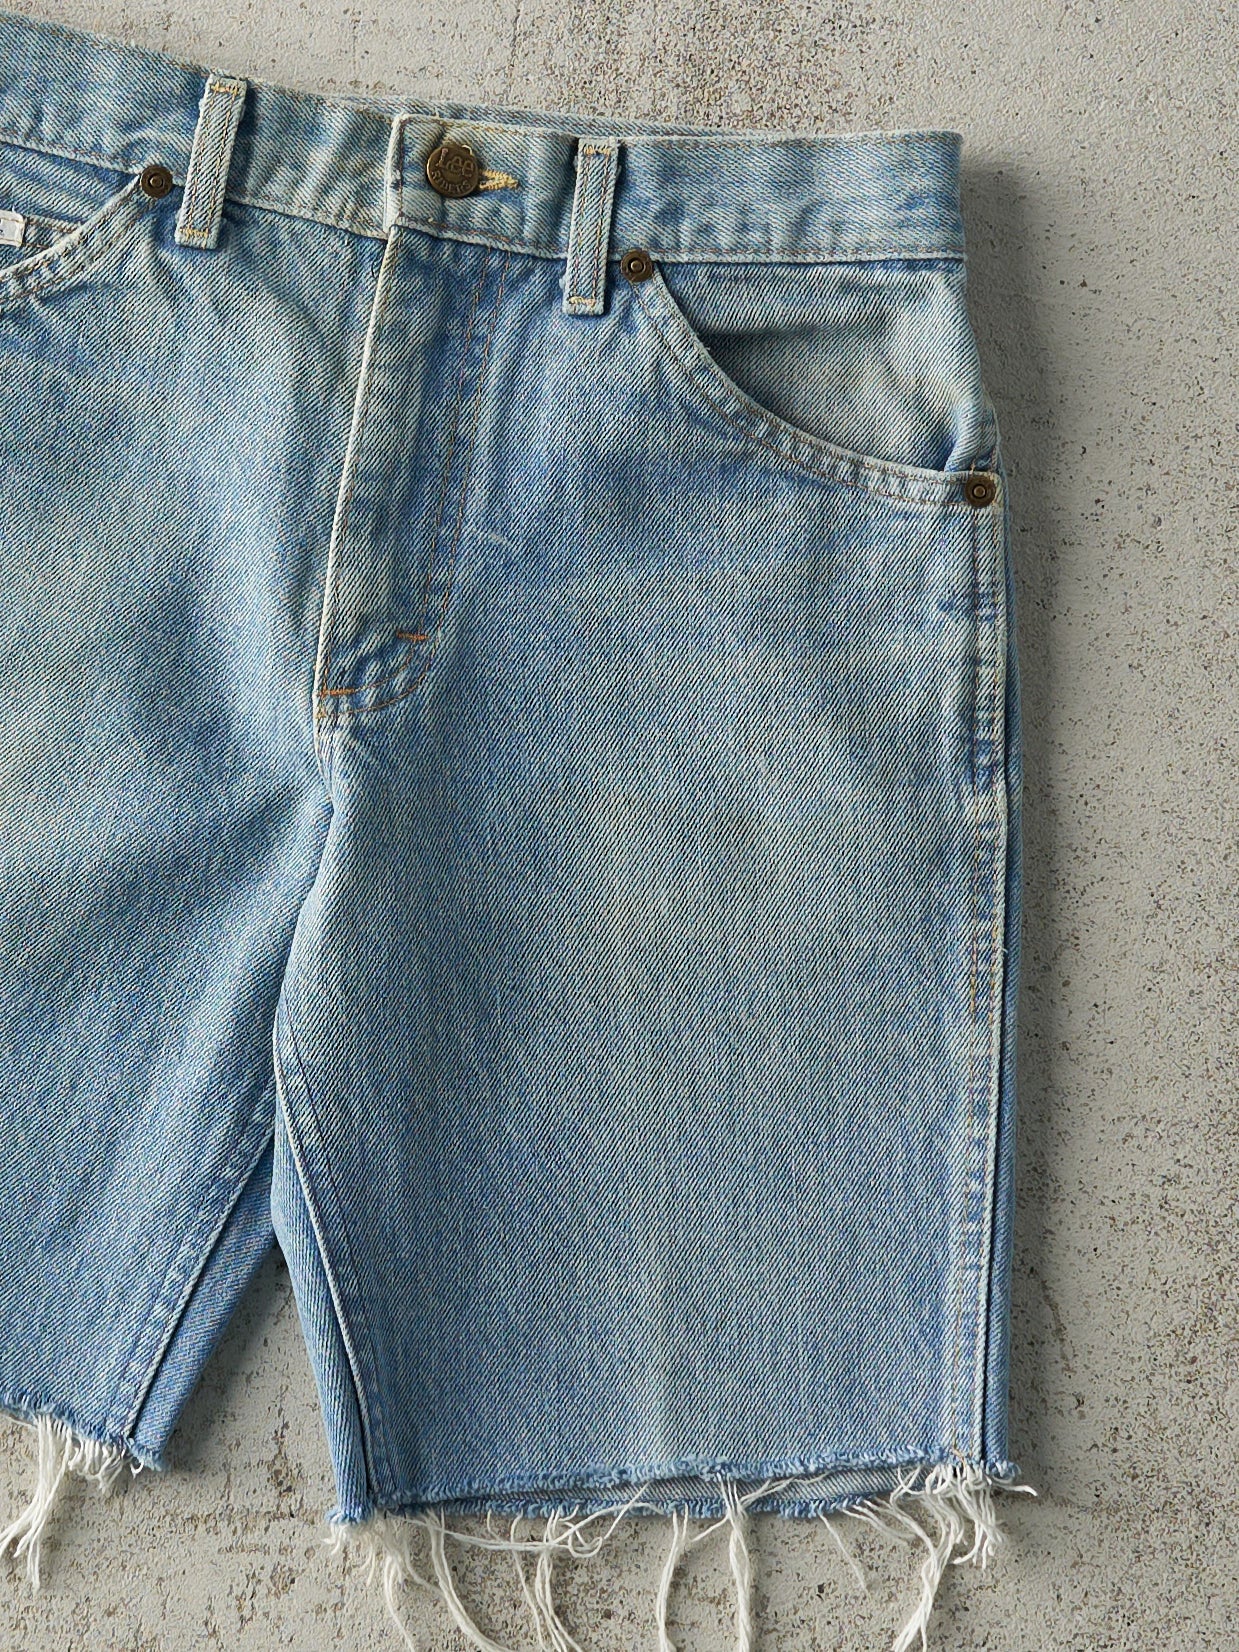 Vintage 90s Light Wash Lee Cut Off Jean Shorts (27x8)